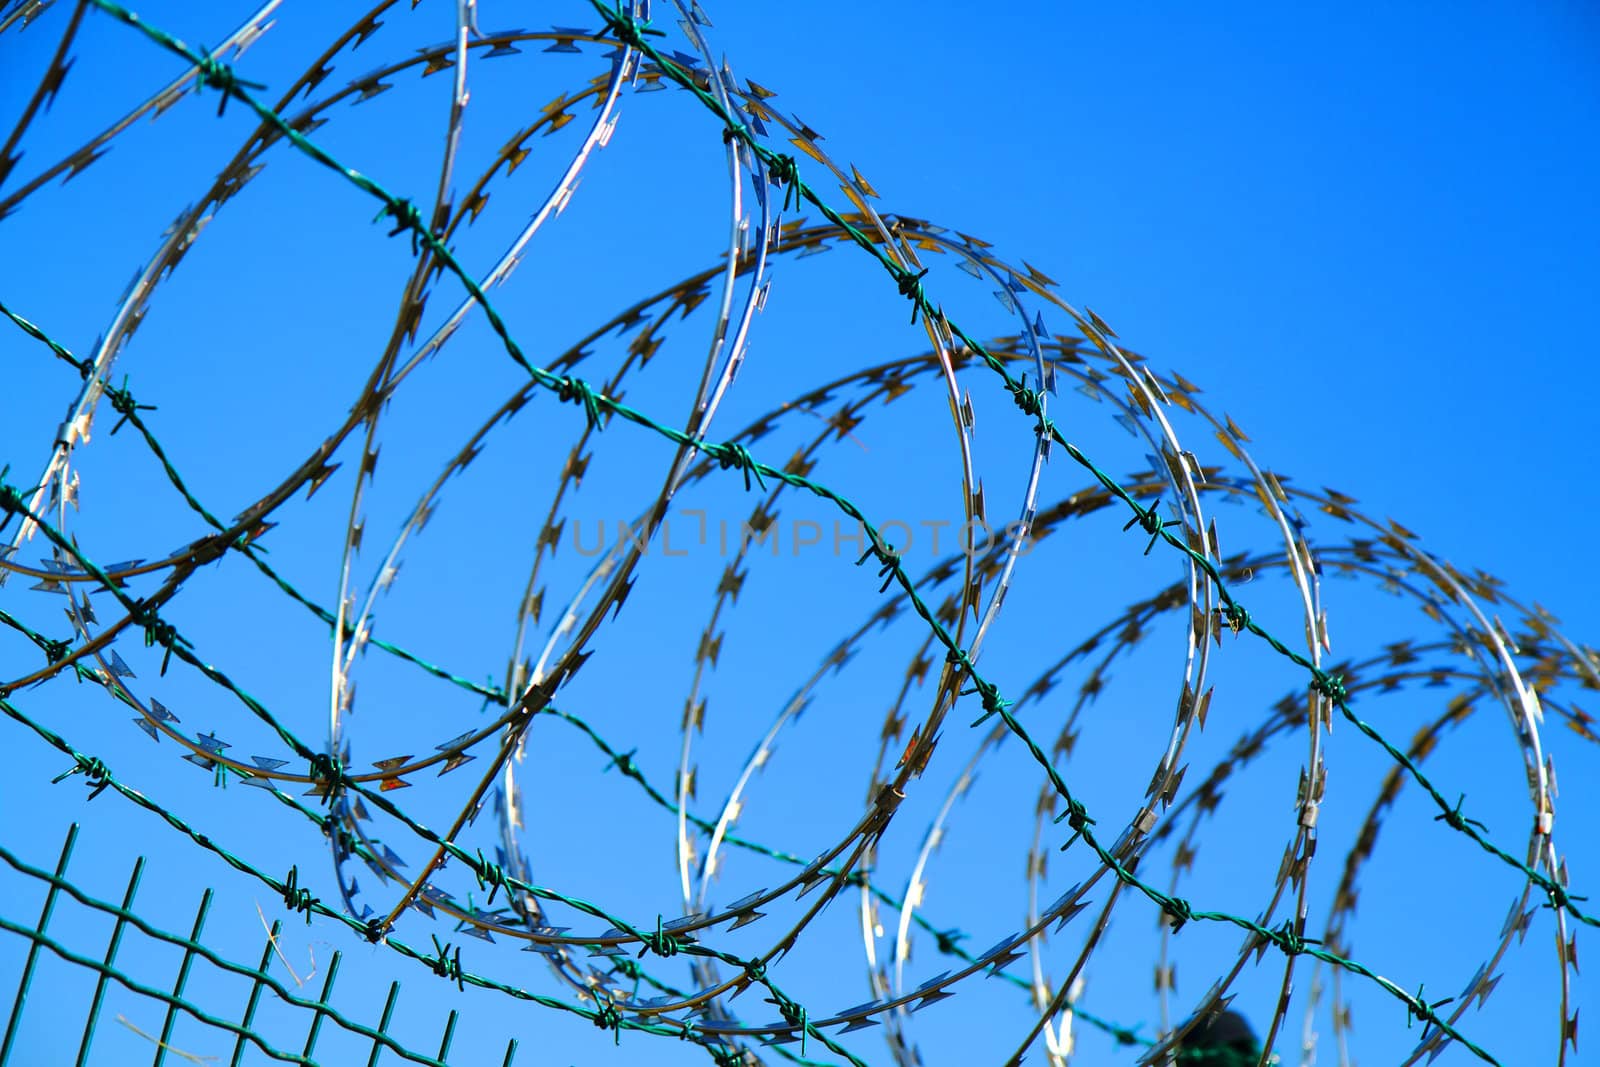 barbed wire against blue sky  by jonnysek